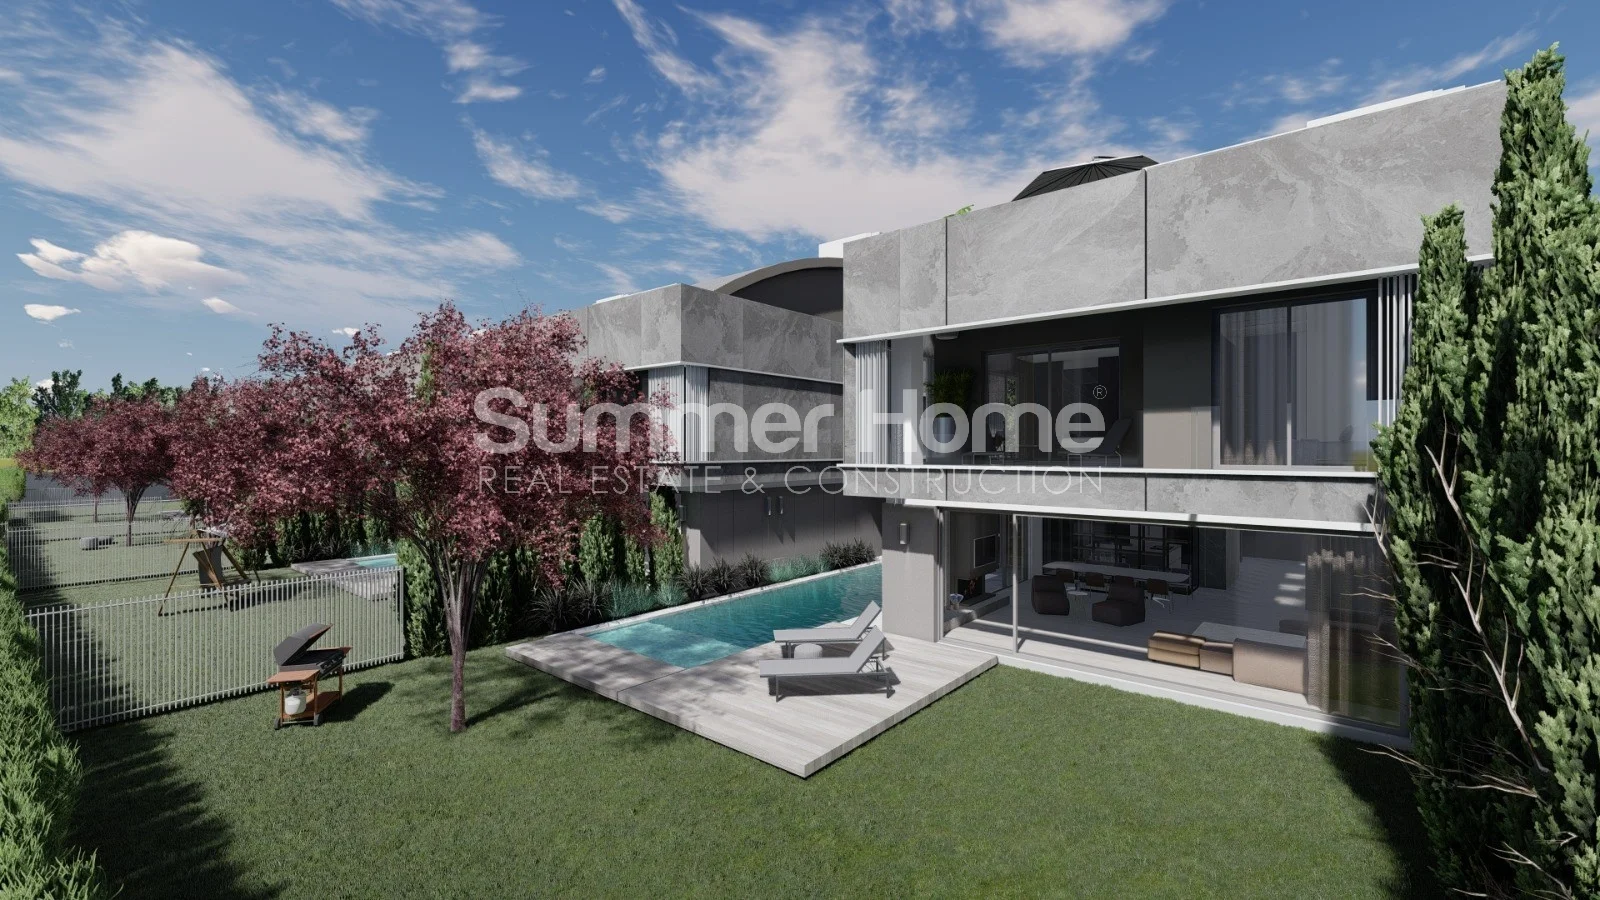 Summer Home Properties Image